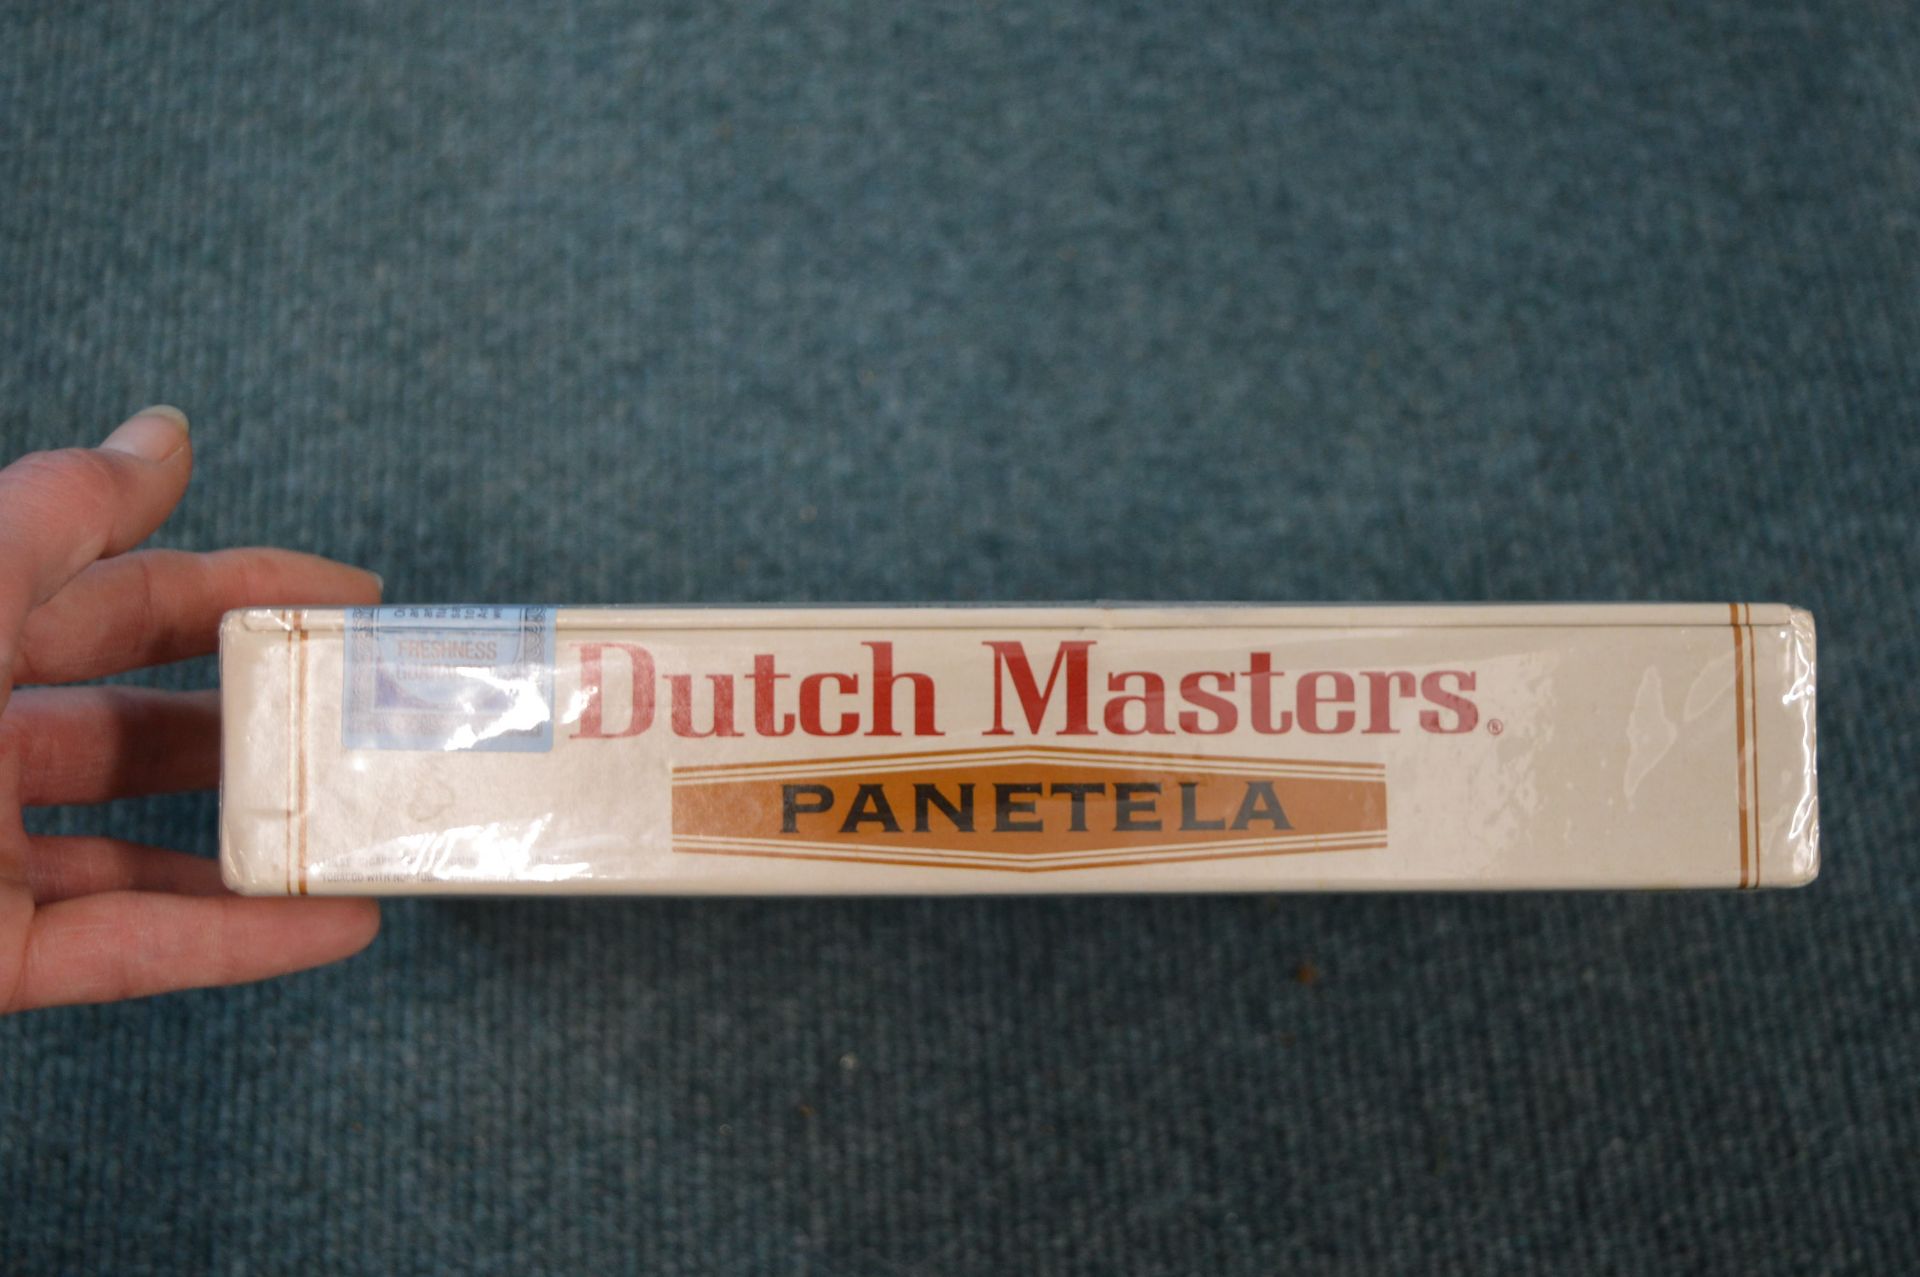 Unopened Box of 50 Dutch Masters Panatella Vintage - Image 2 of 3